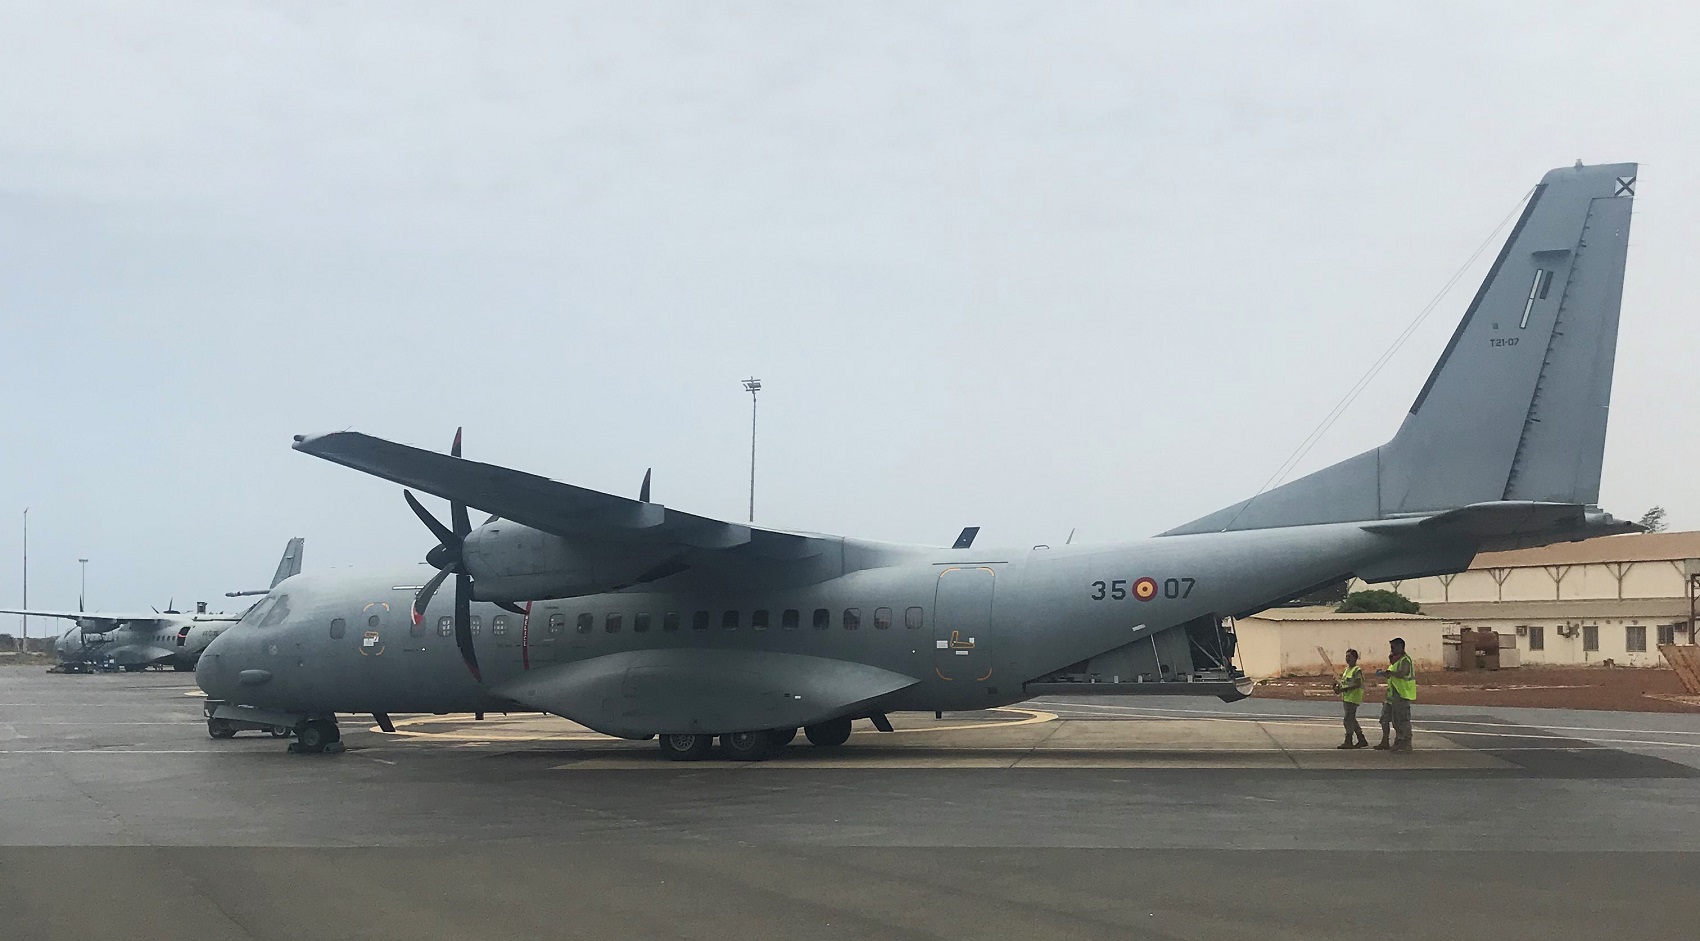 the new T-21 after landing in Dakar